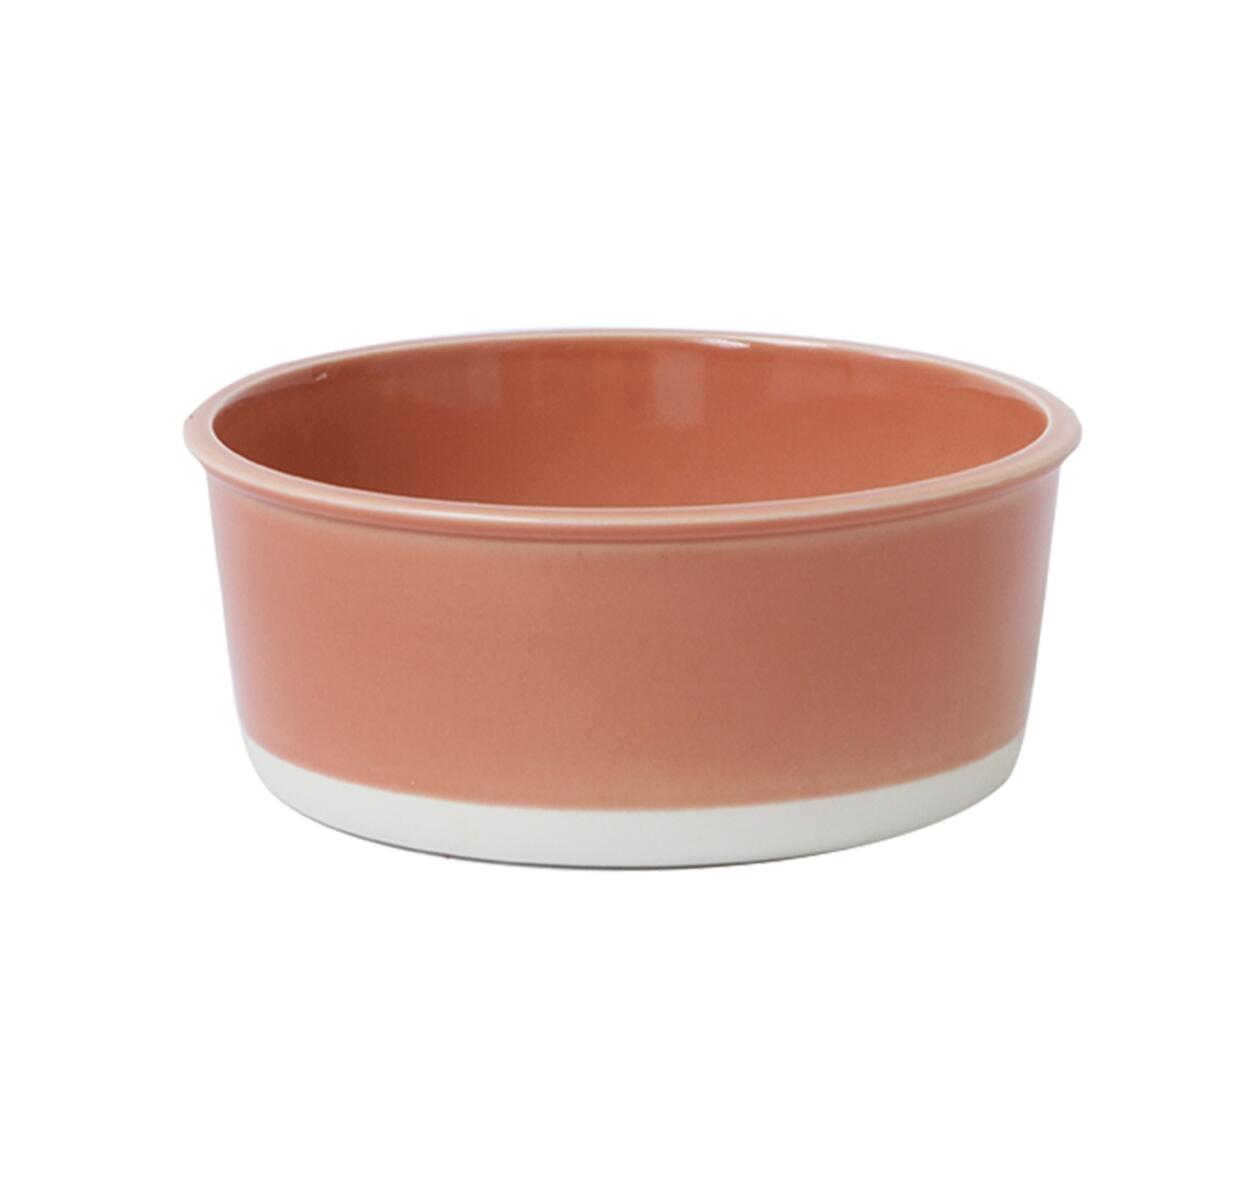 Serving bowl Cantine terre cuite, buy ceramics online